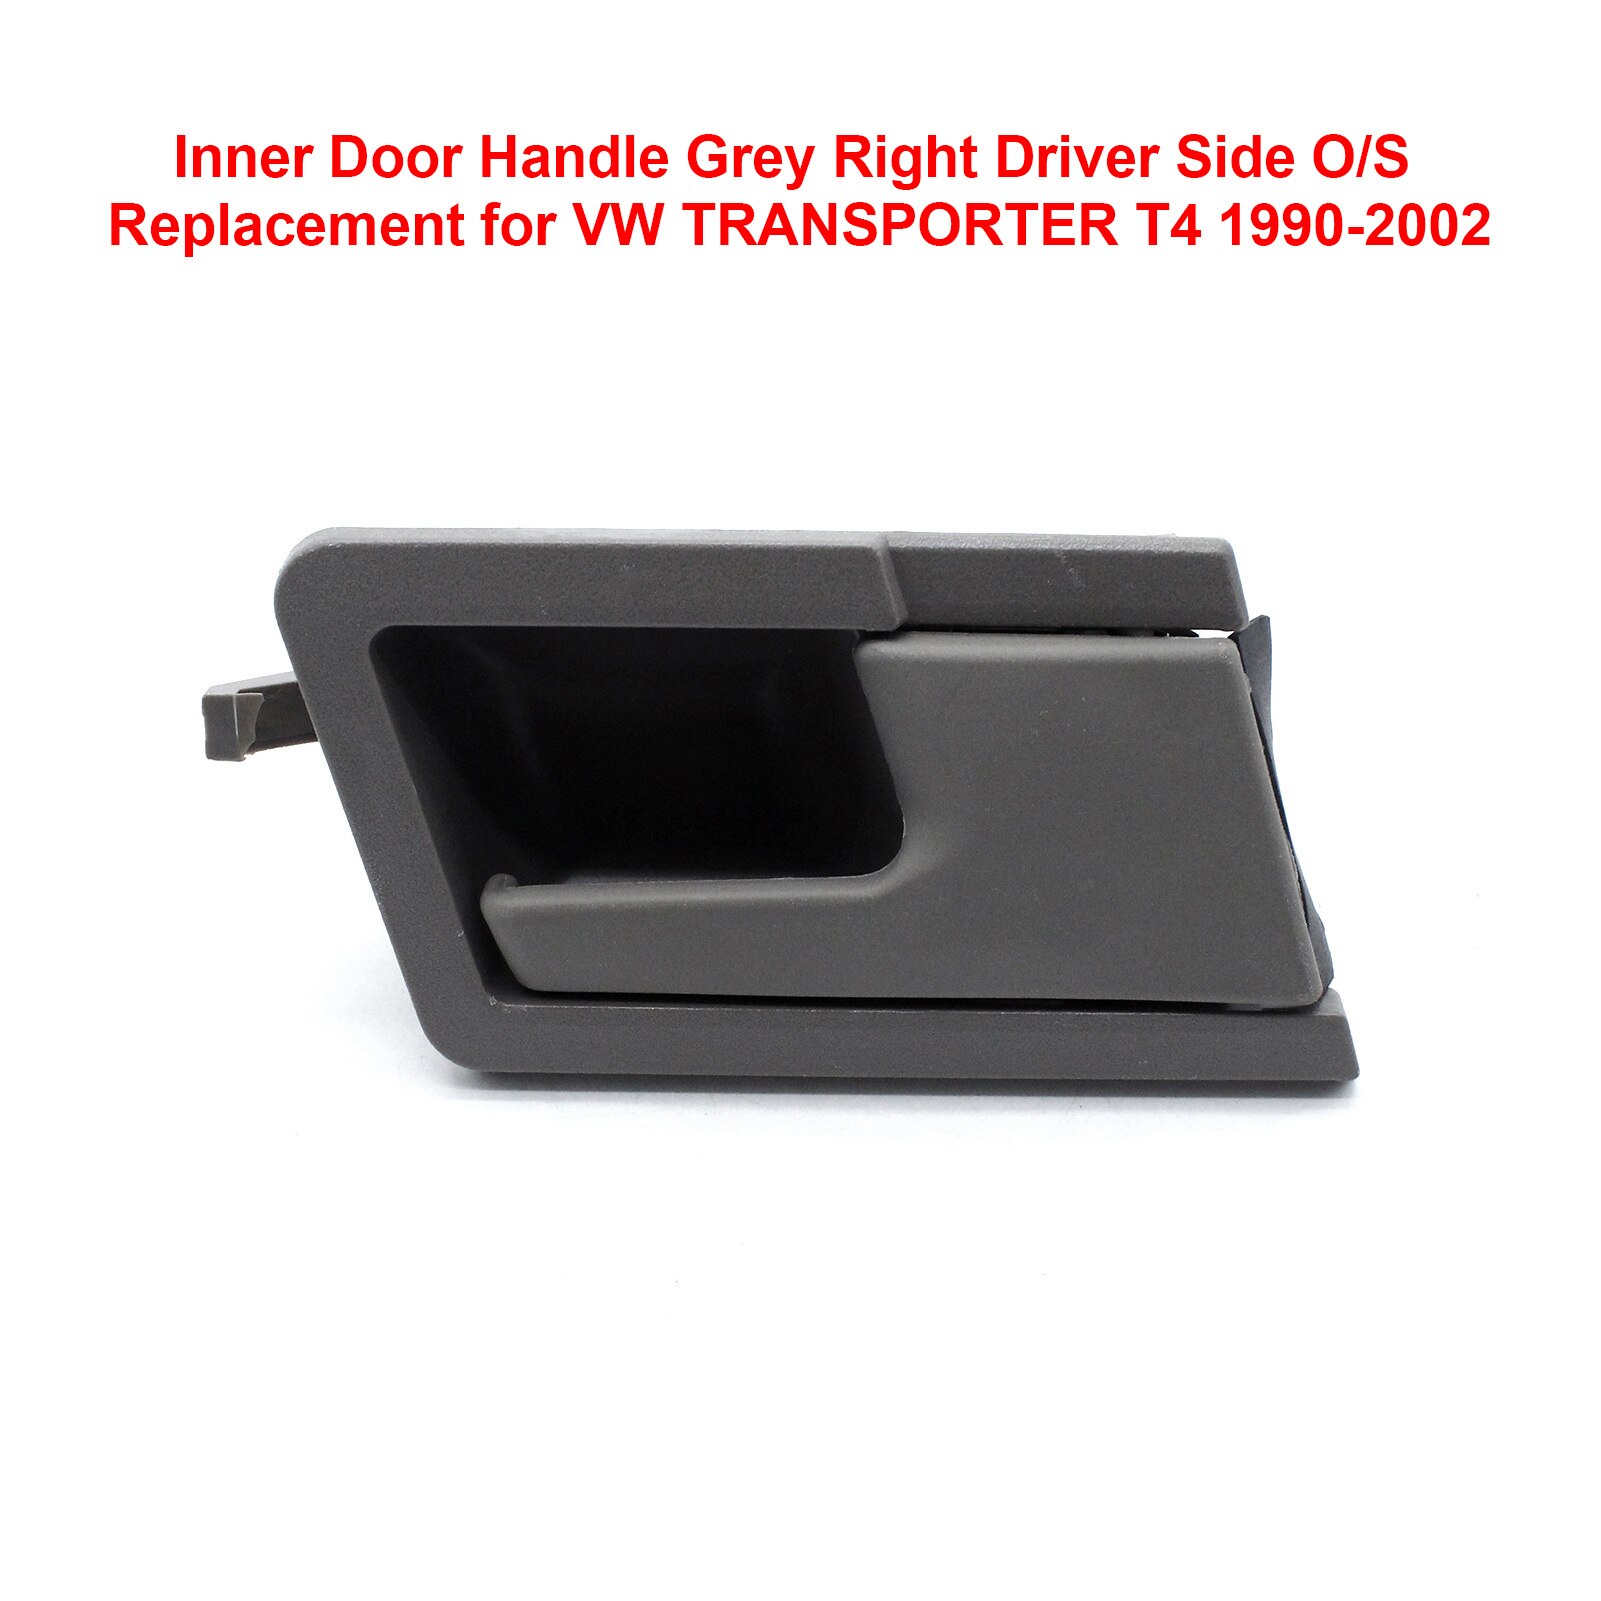 Binnendeur Handvat Grijs Links Driver Side O/S Vervanging Voor Vw Transporter T4 1990-2002